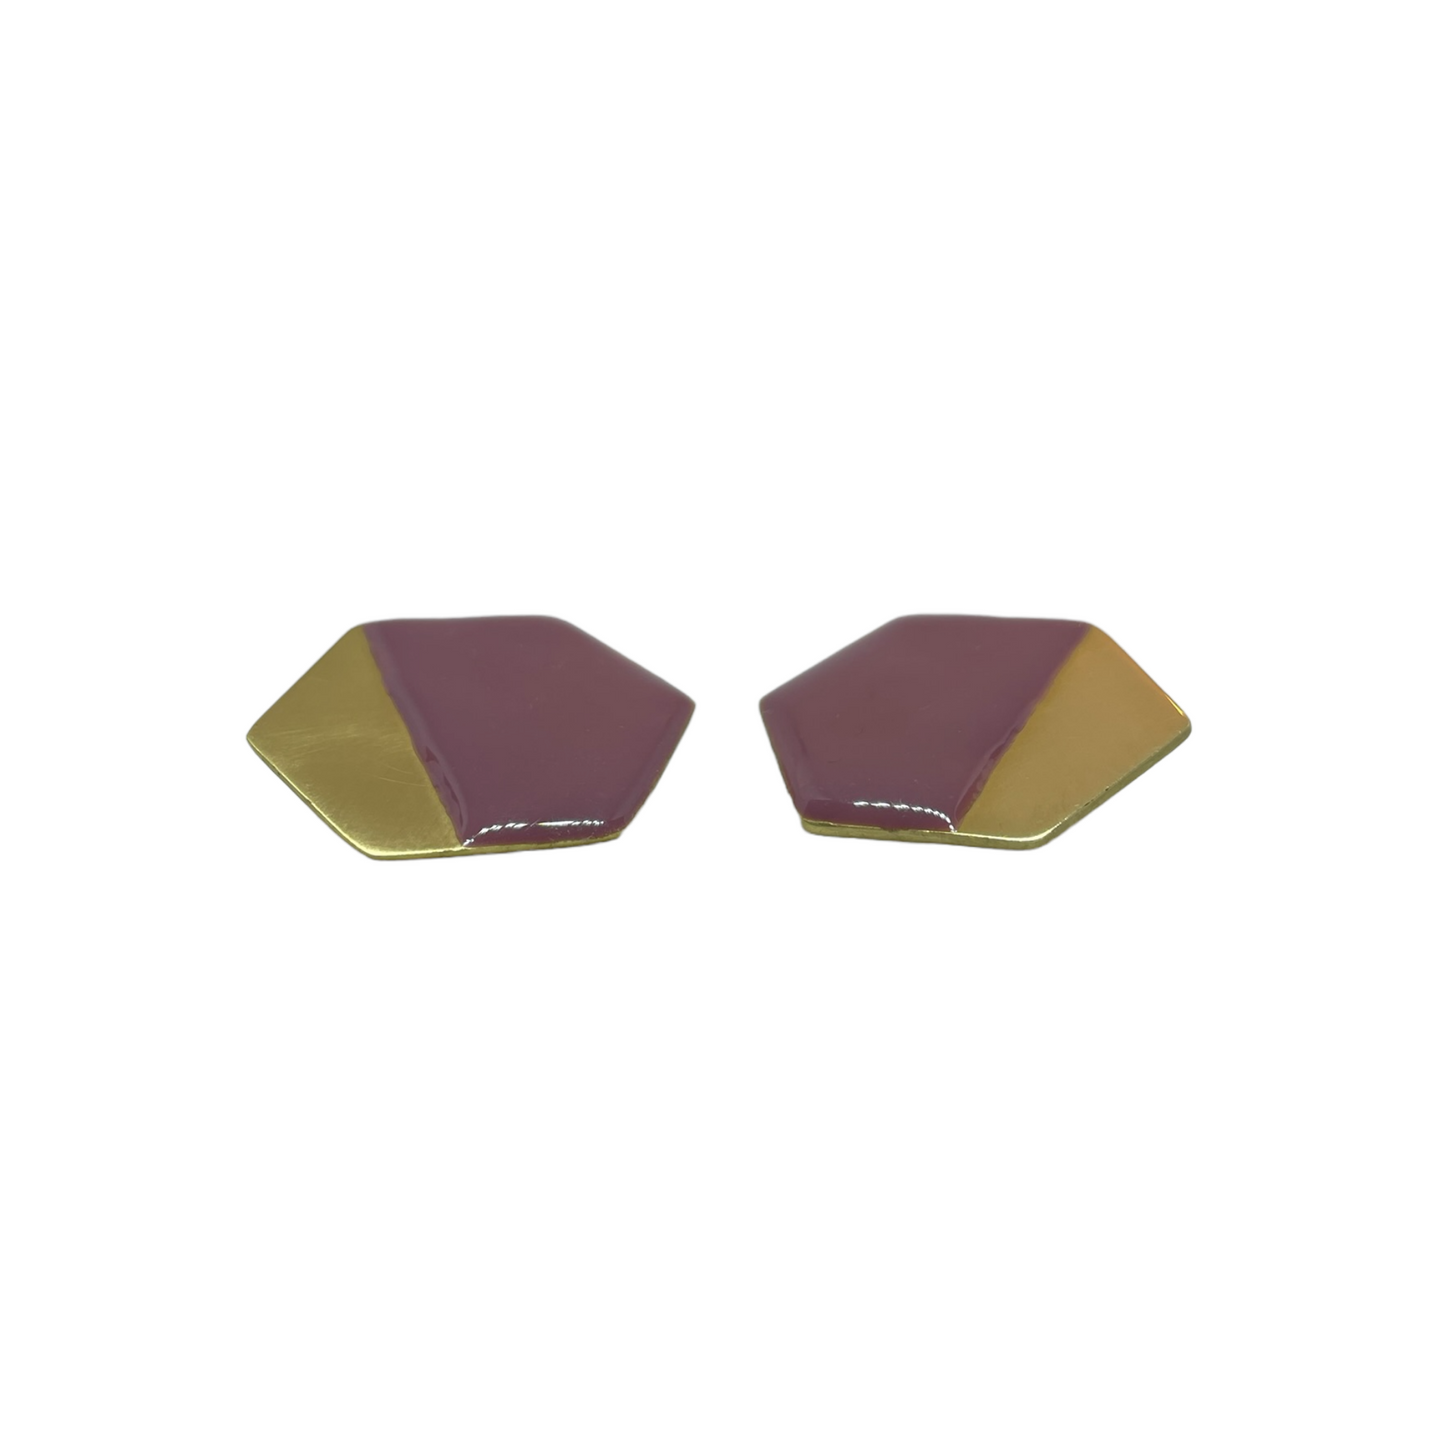 Brass earrings with resin | Successive Peaks Earrings - CURIUDO